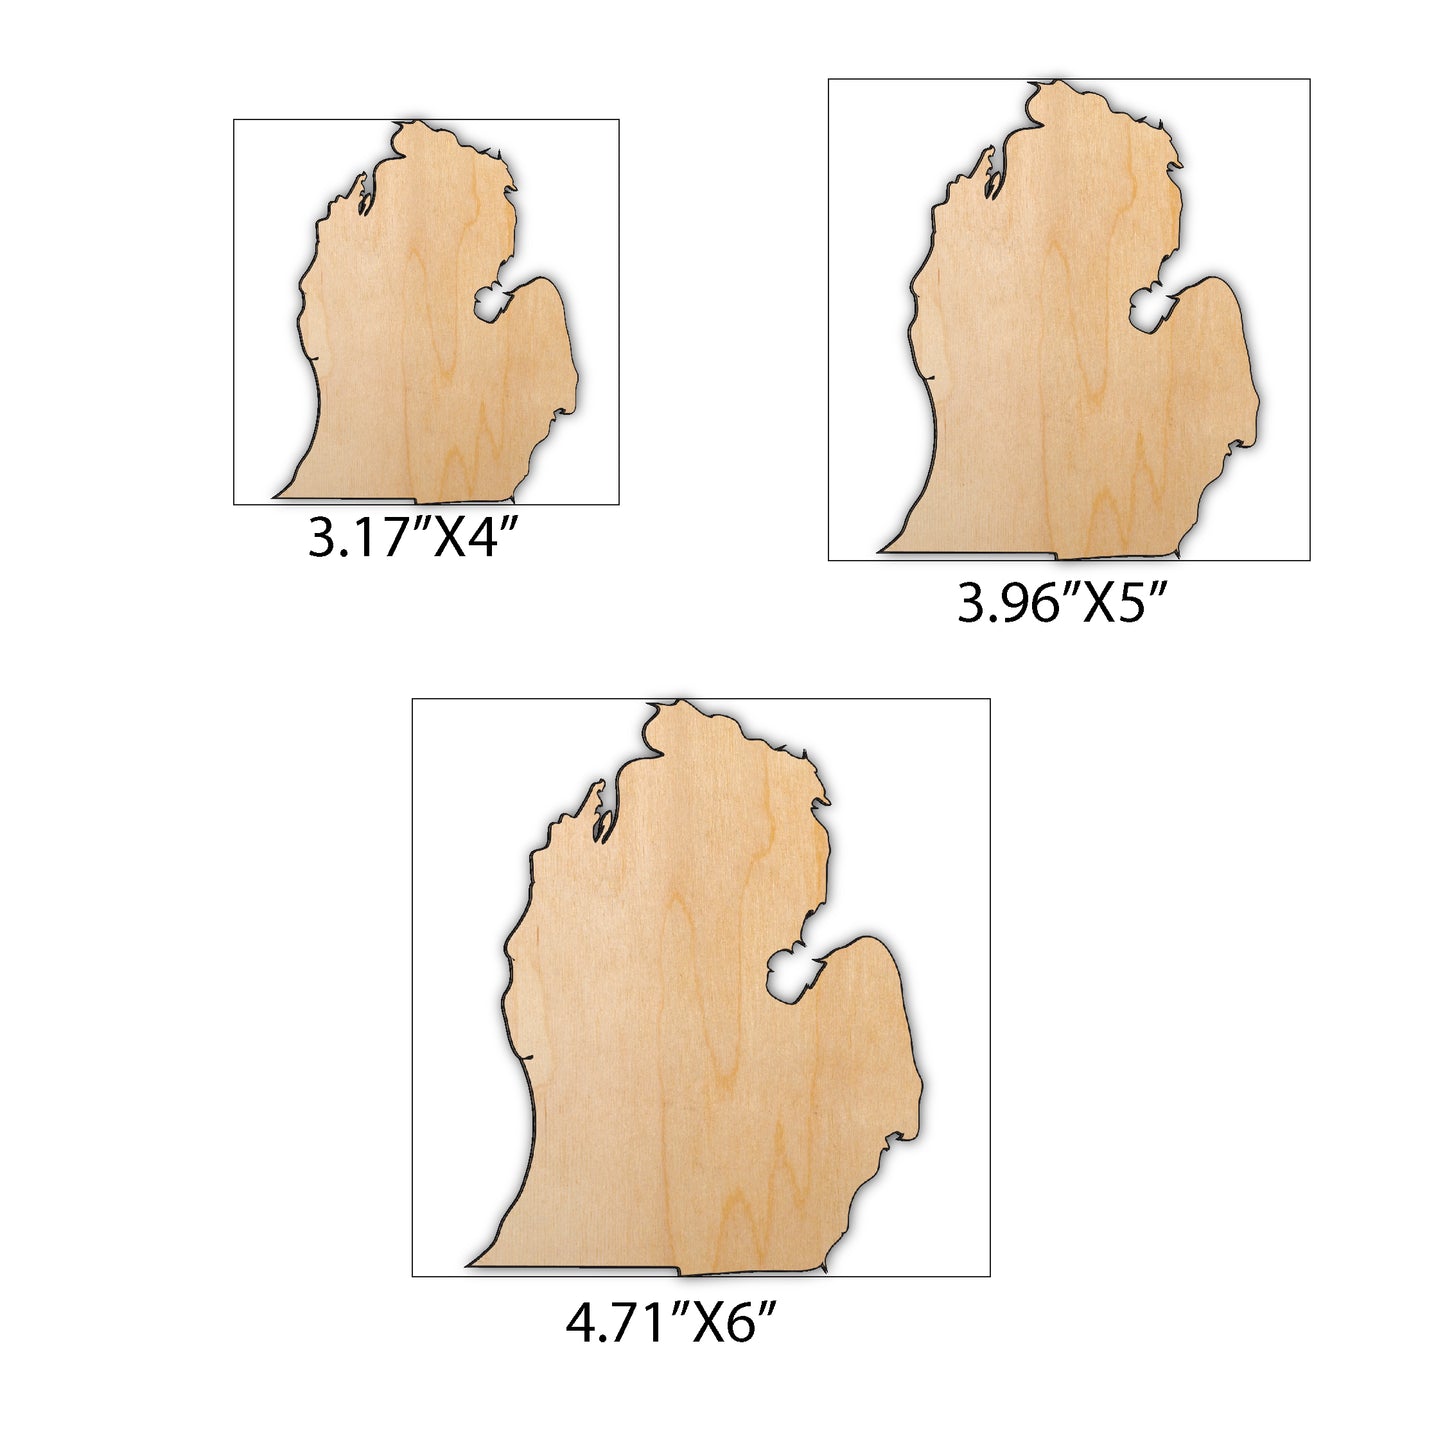 State of Michigan blank wood for art, wood blank, blank wood, cut to shape wood